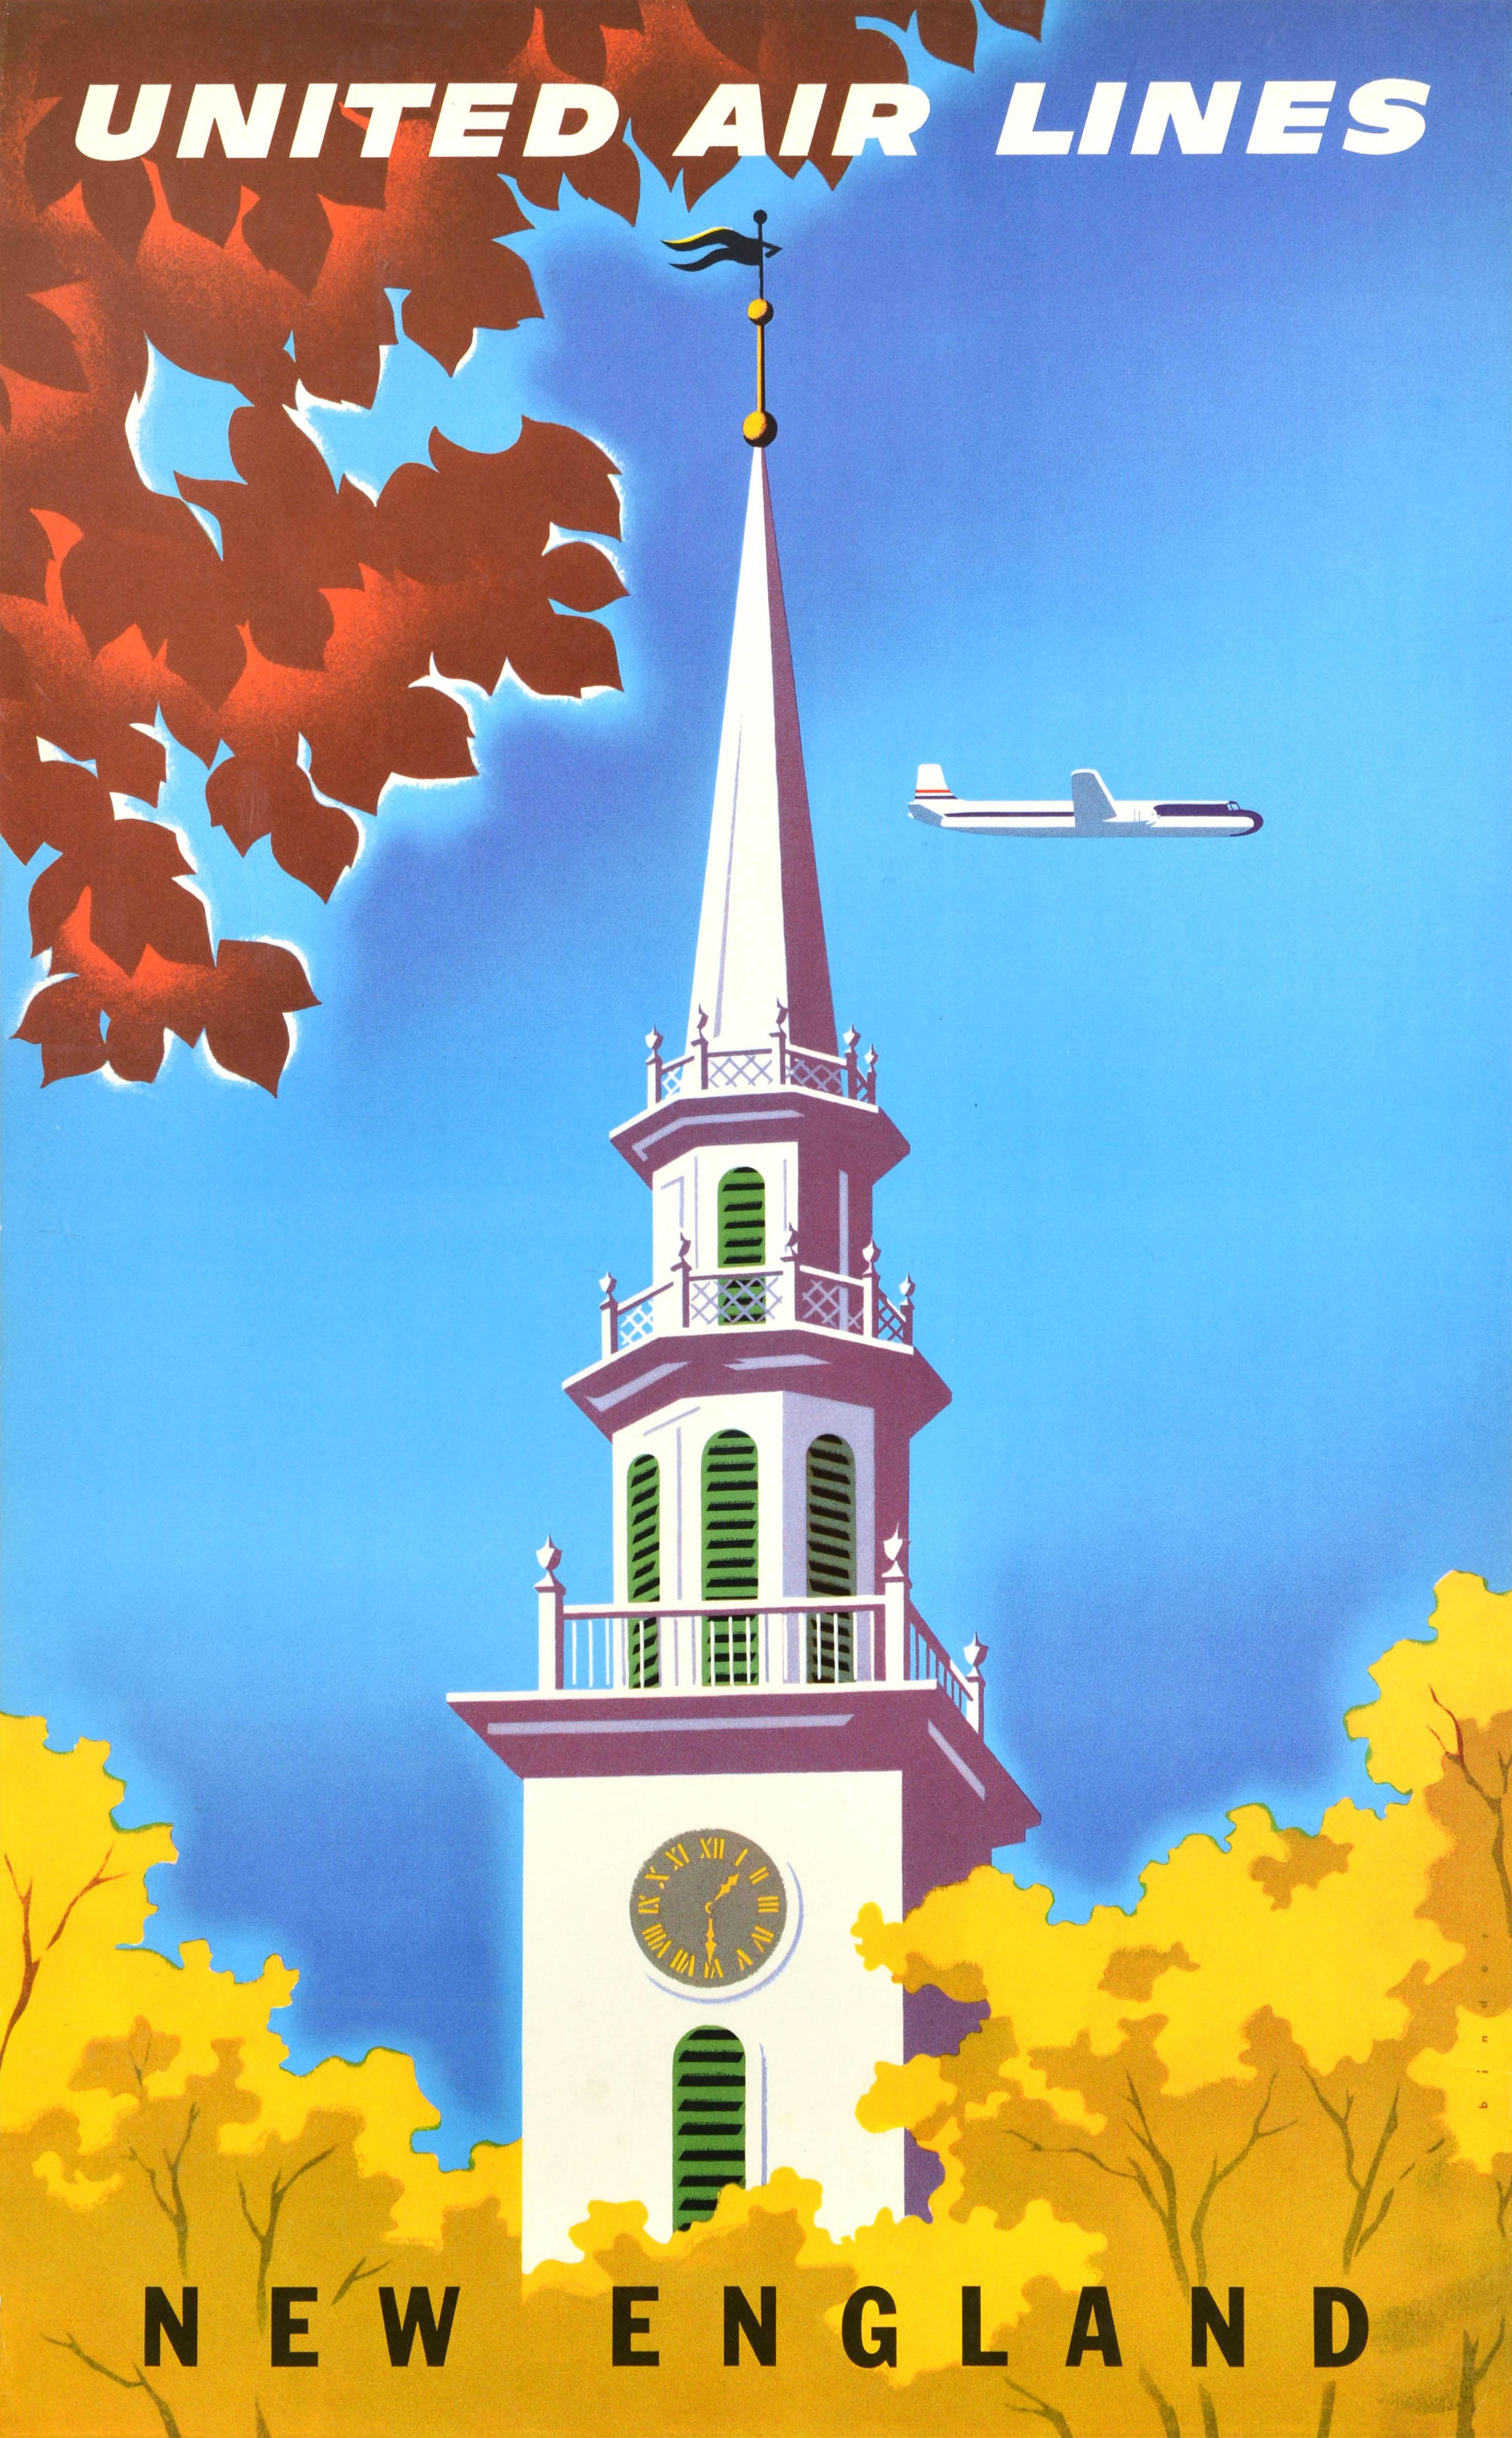 Print Joseph Binder - Affiche publicitaire originale de voyage United Air Lines New England Binder